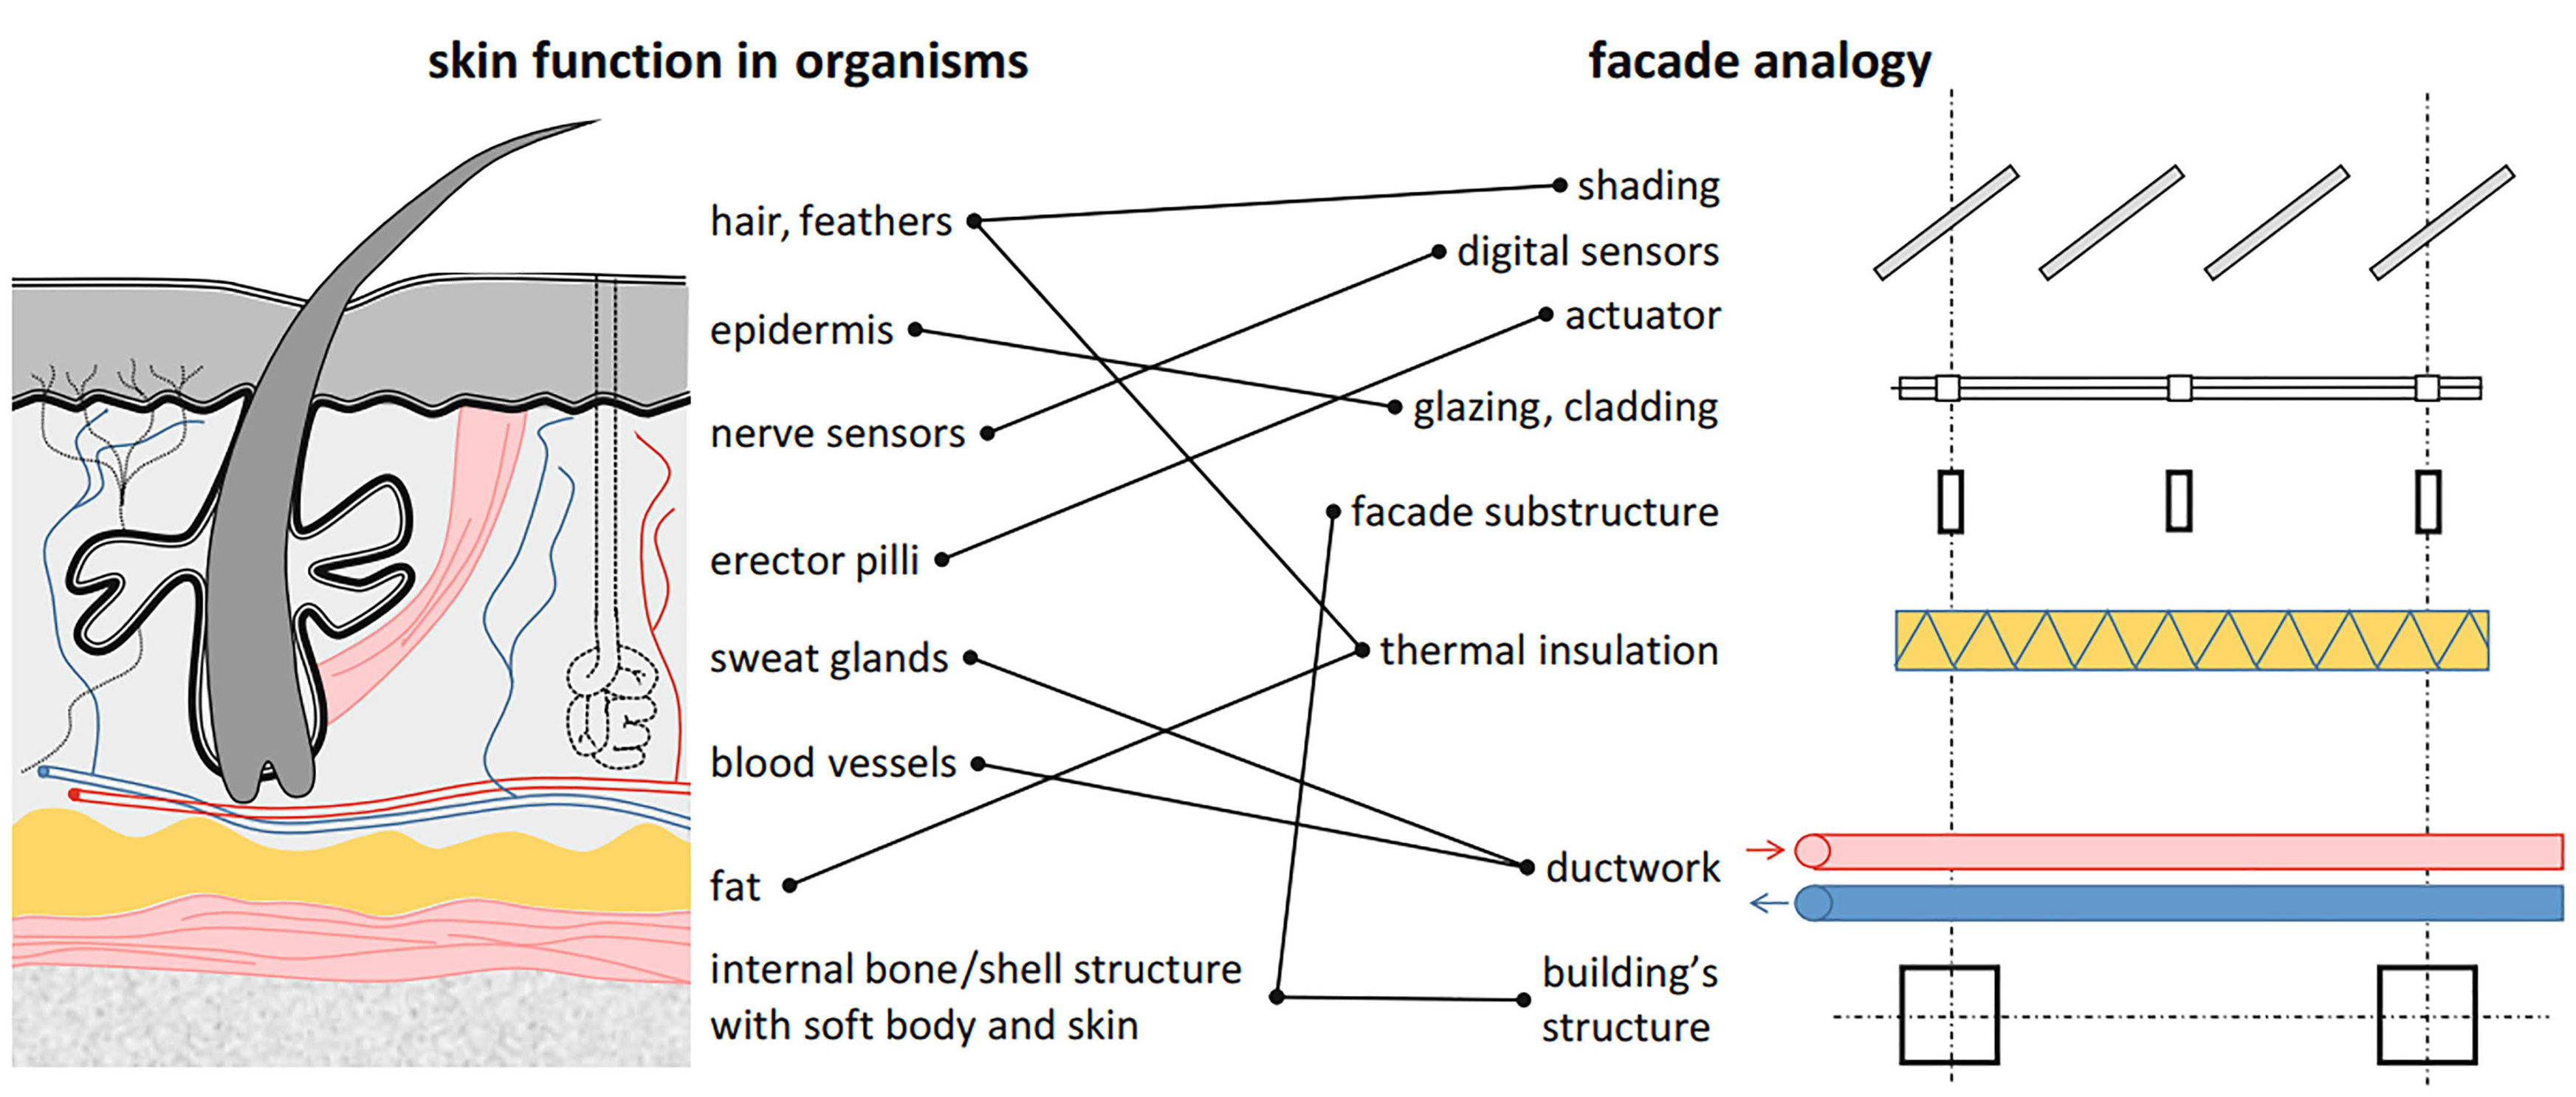 Key similarities between organisms’ skin and building façades [24].